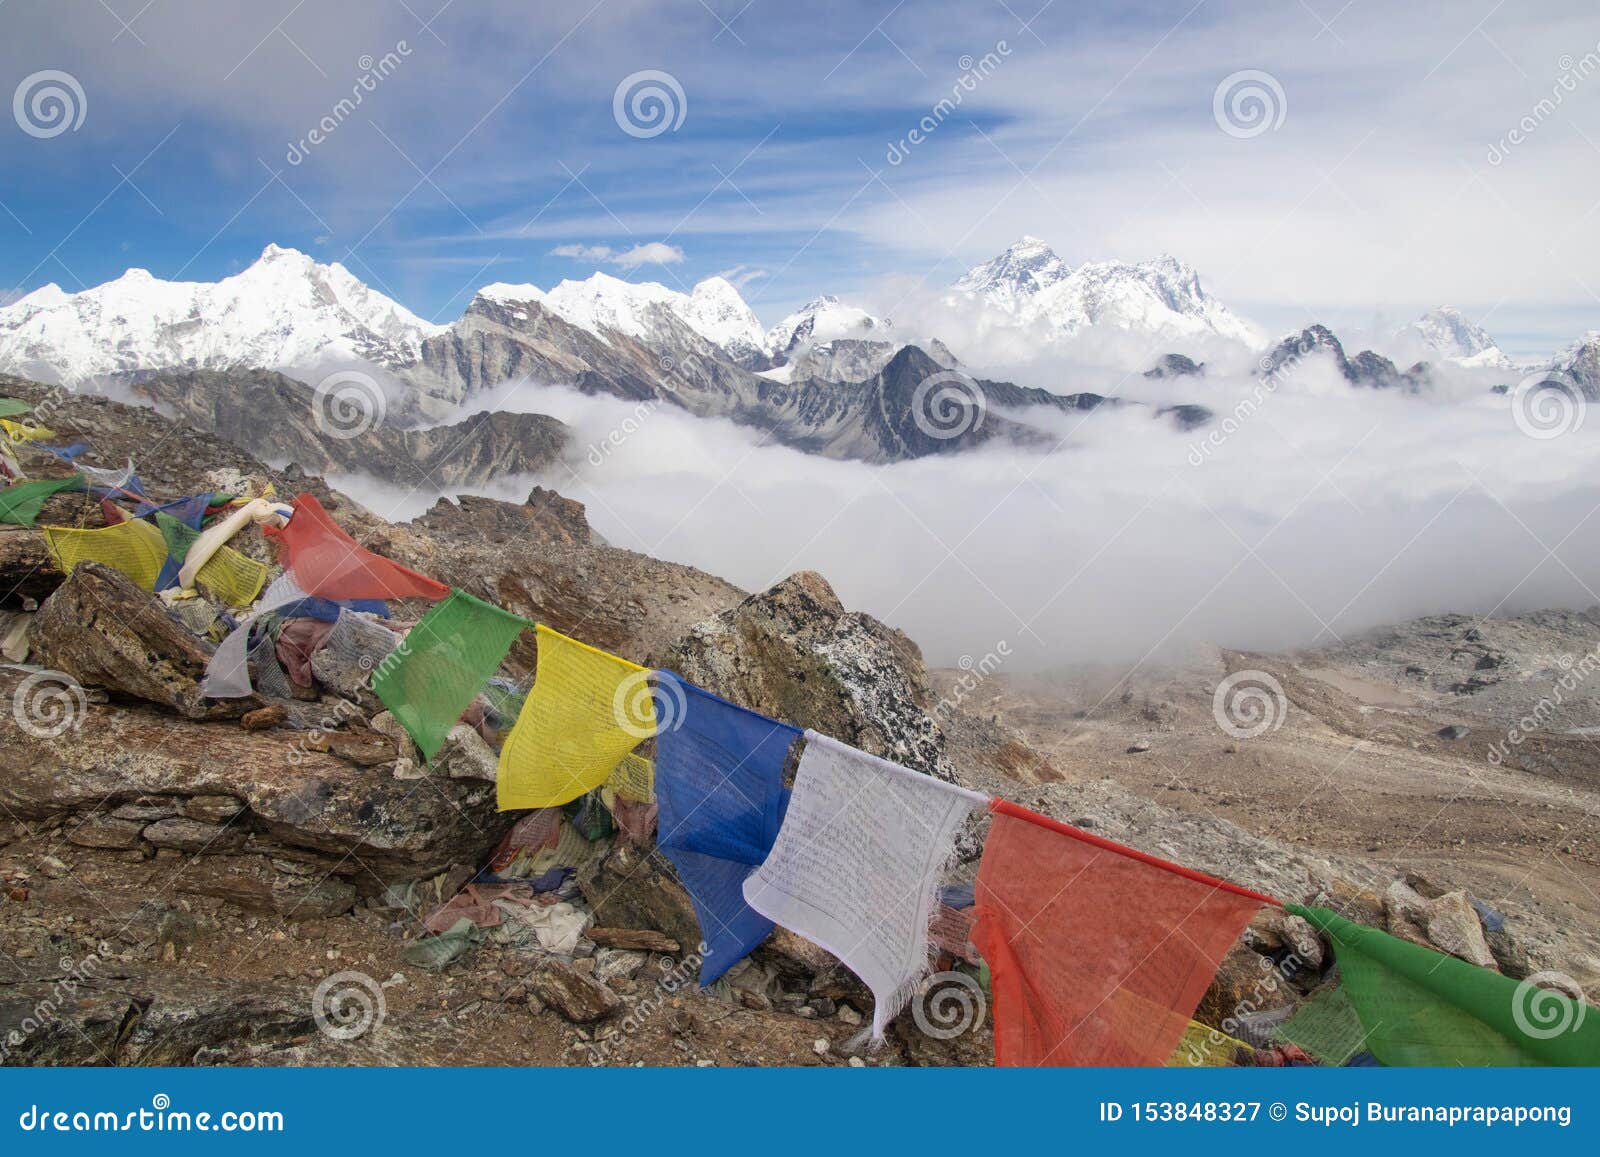 everest base camp trekking nepal scenics view of himalaya mountain range at renjo la pass